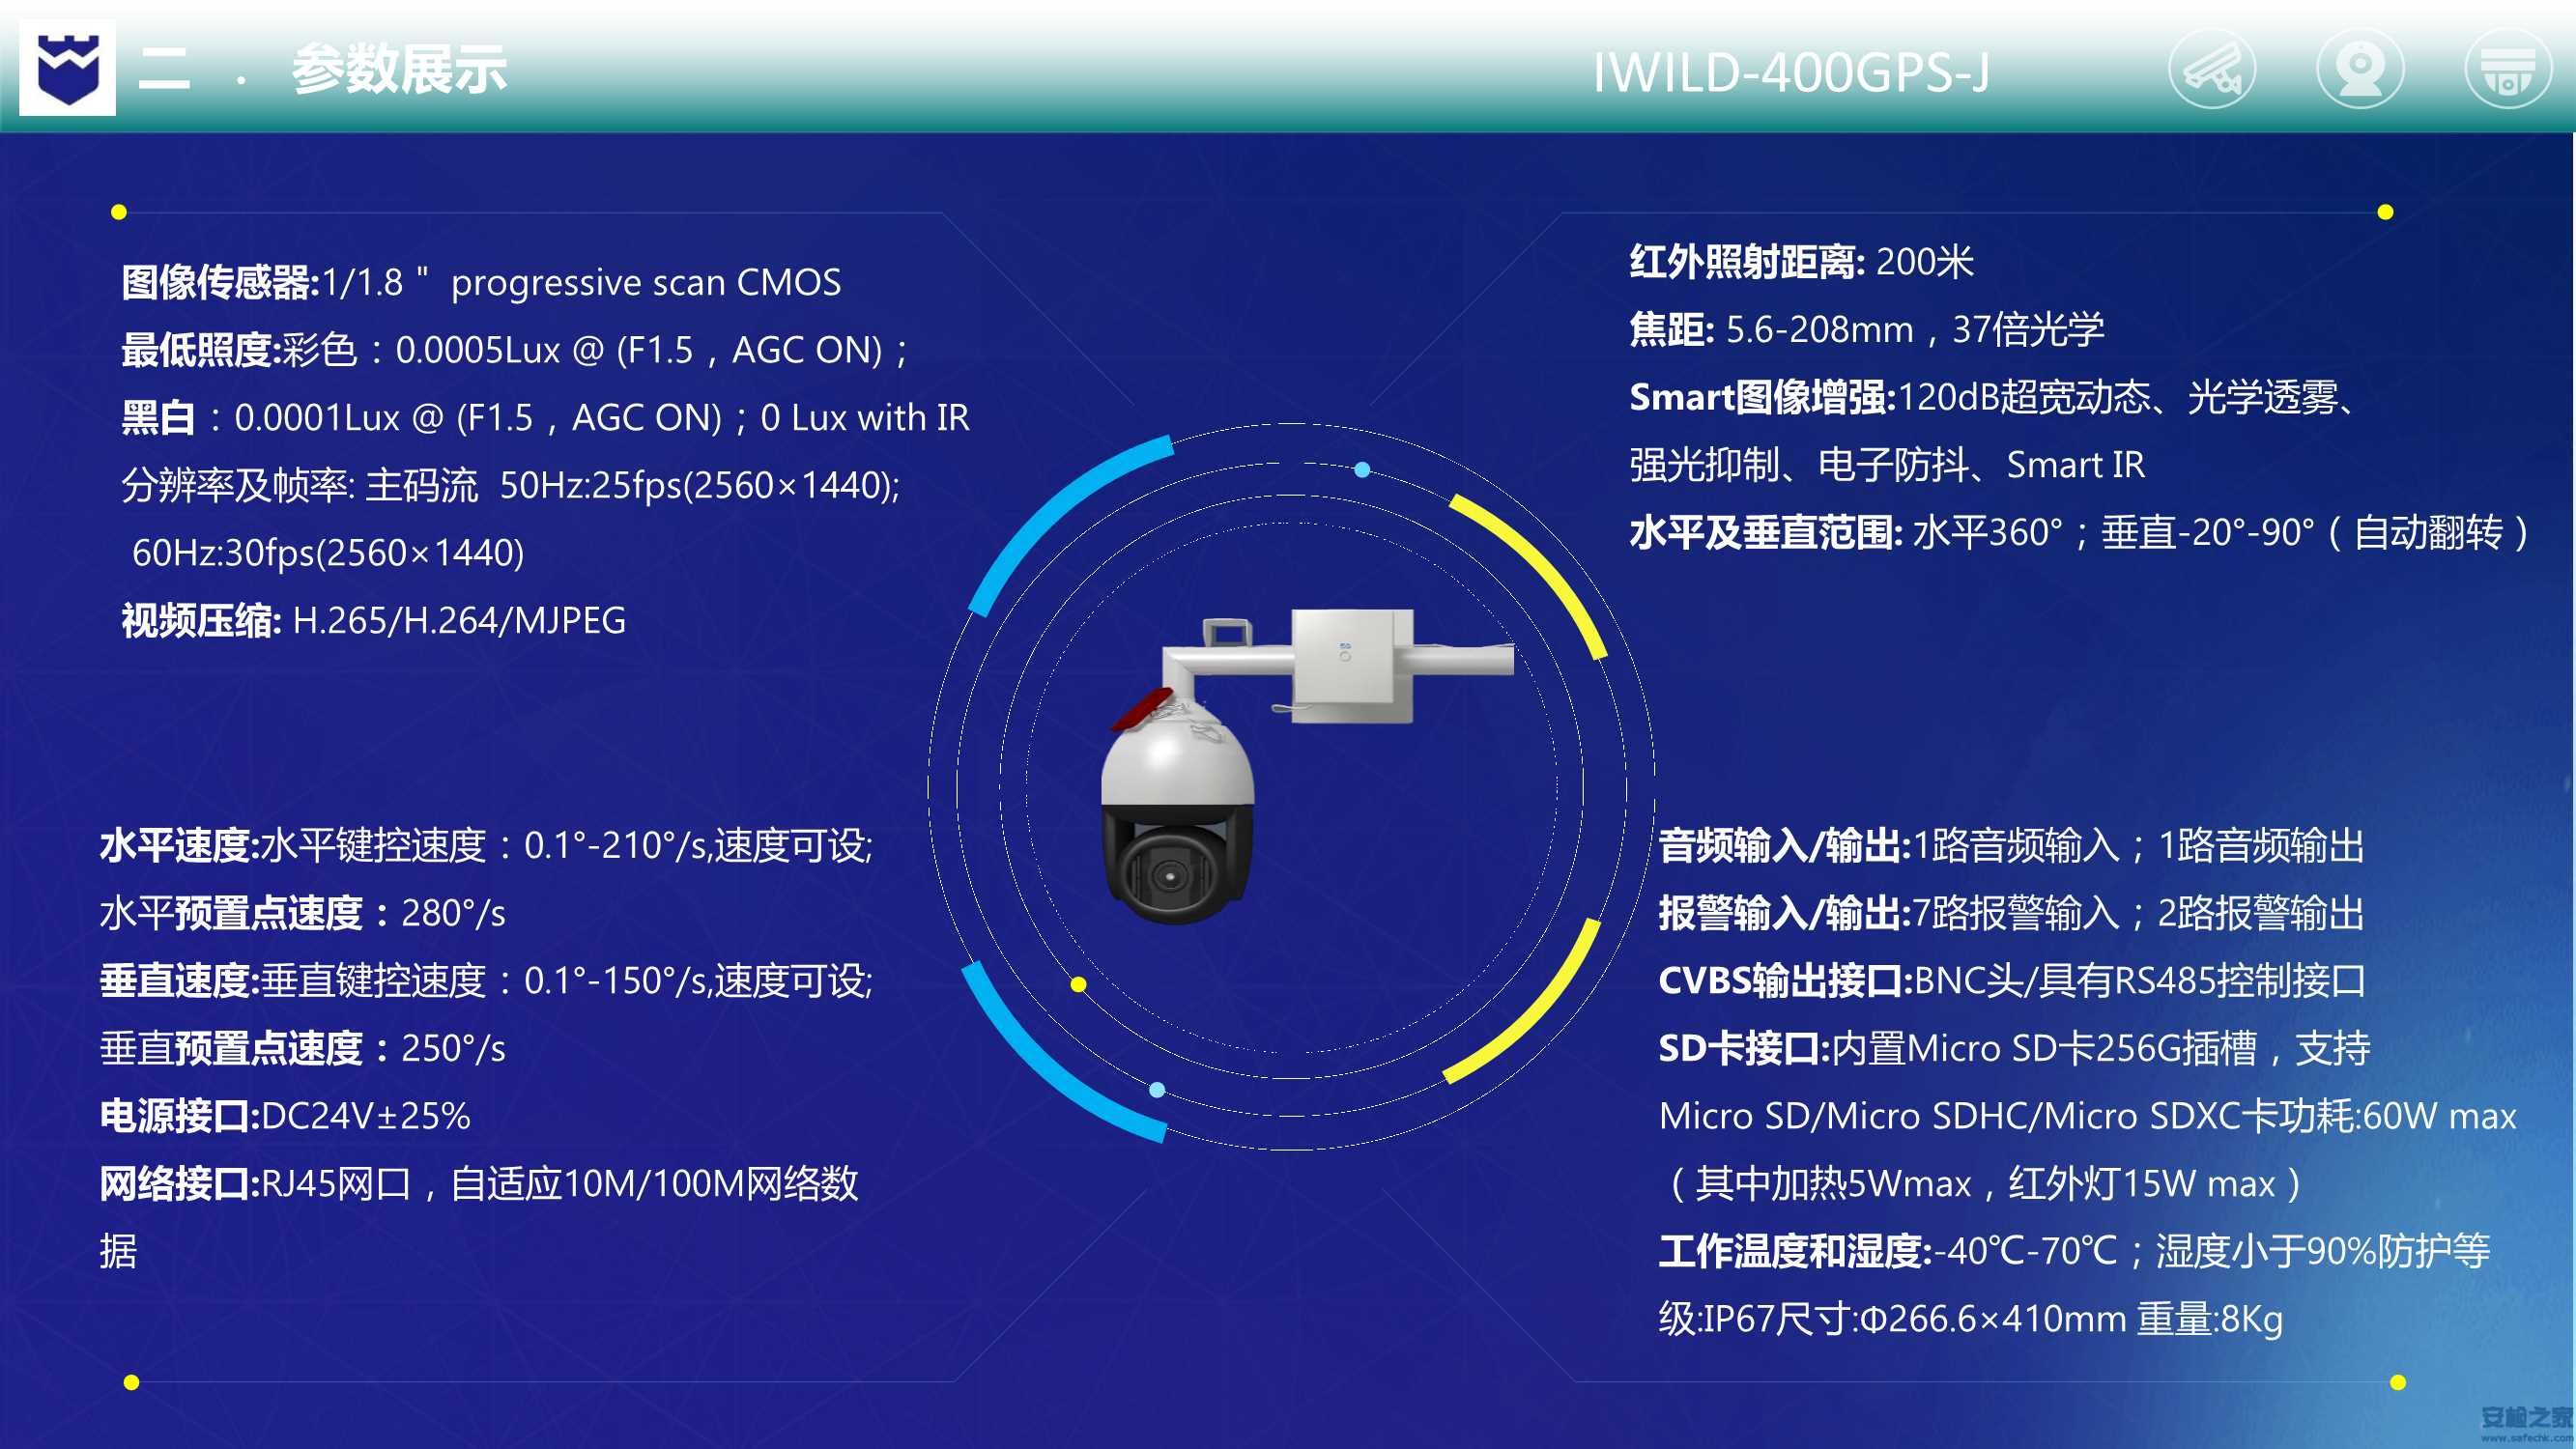 IWILD-400GPS-J便携式监控布防系统_4.Jpg